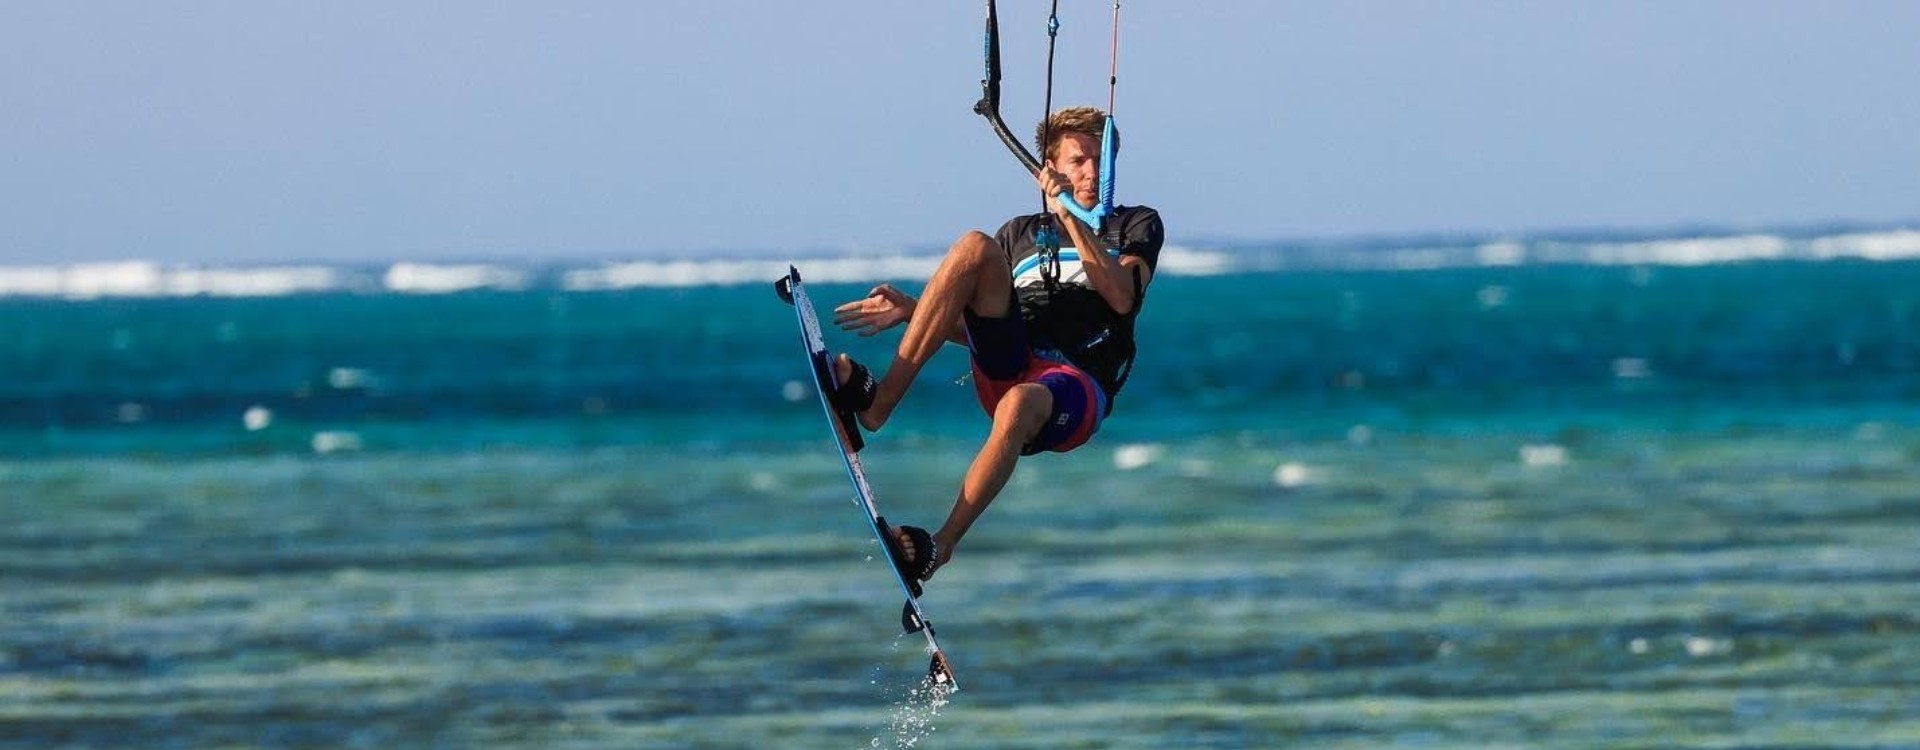 kitesurf instructor felix fleischer jumping